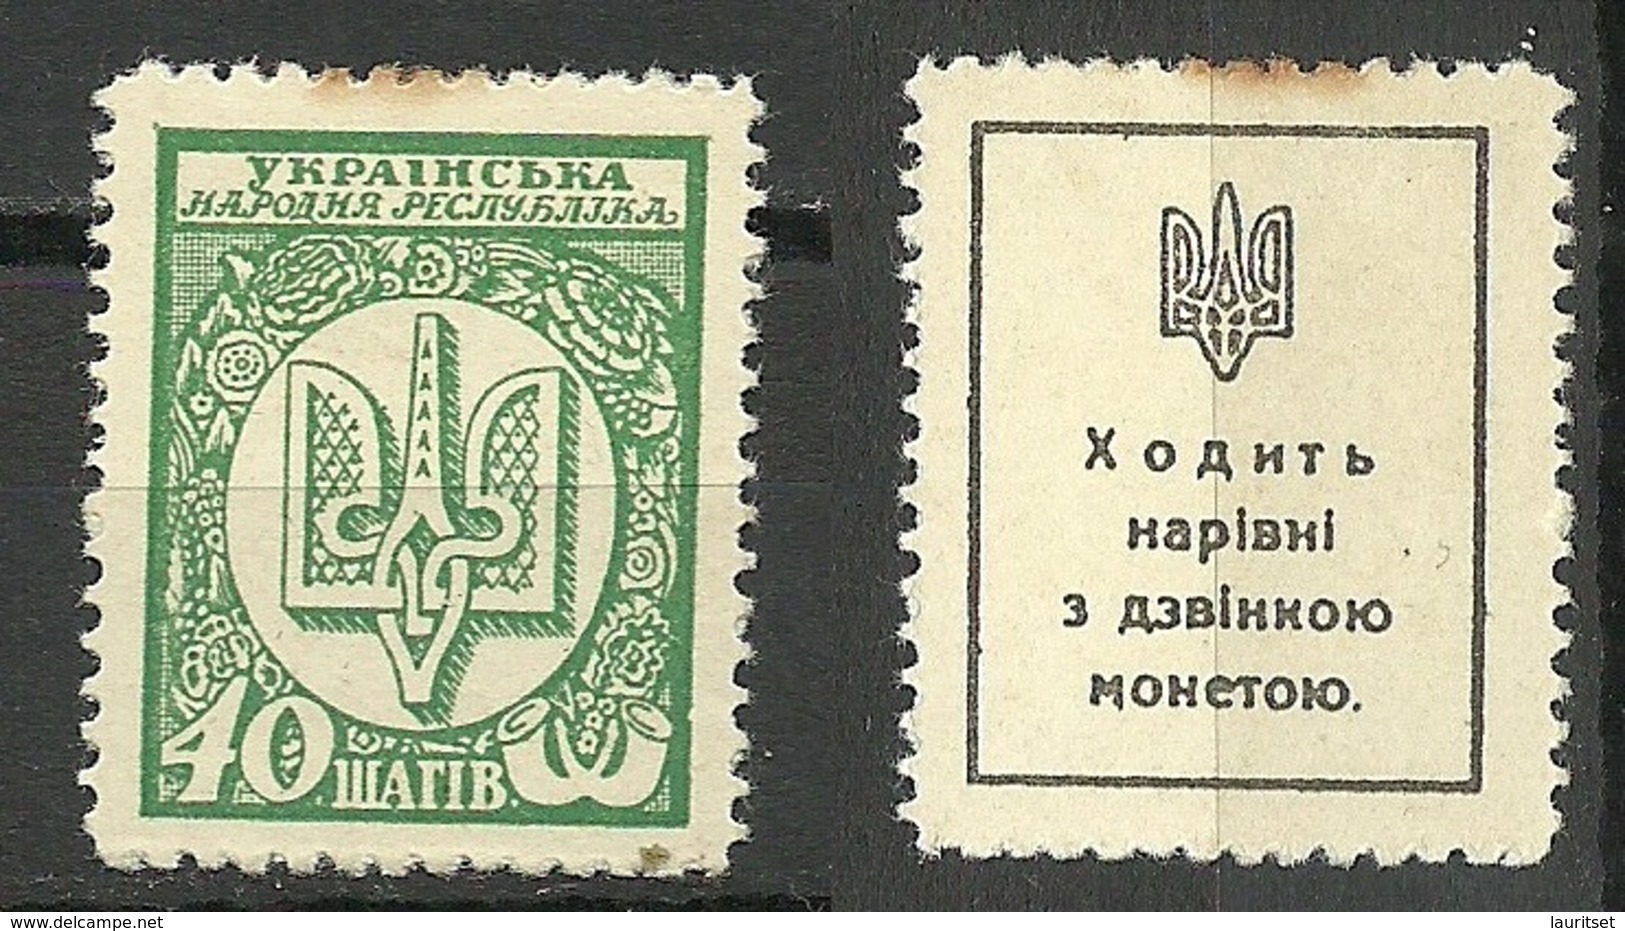 UKRAINA Ukraine 1918 Money Stamp Notgeldmarke * - Ukraine